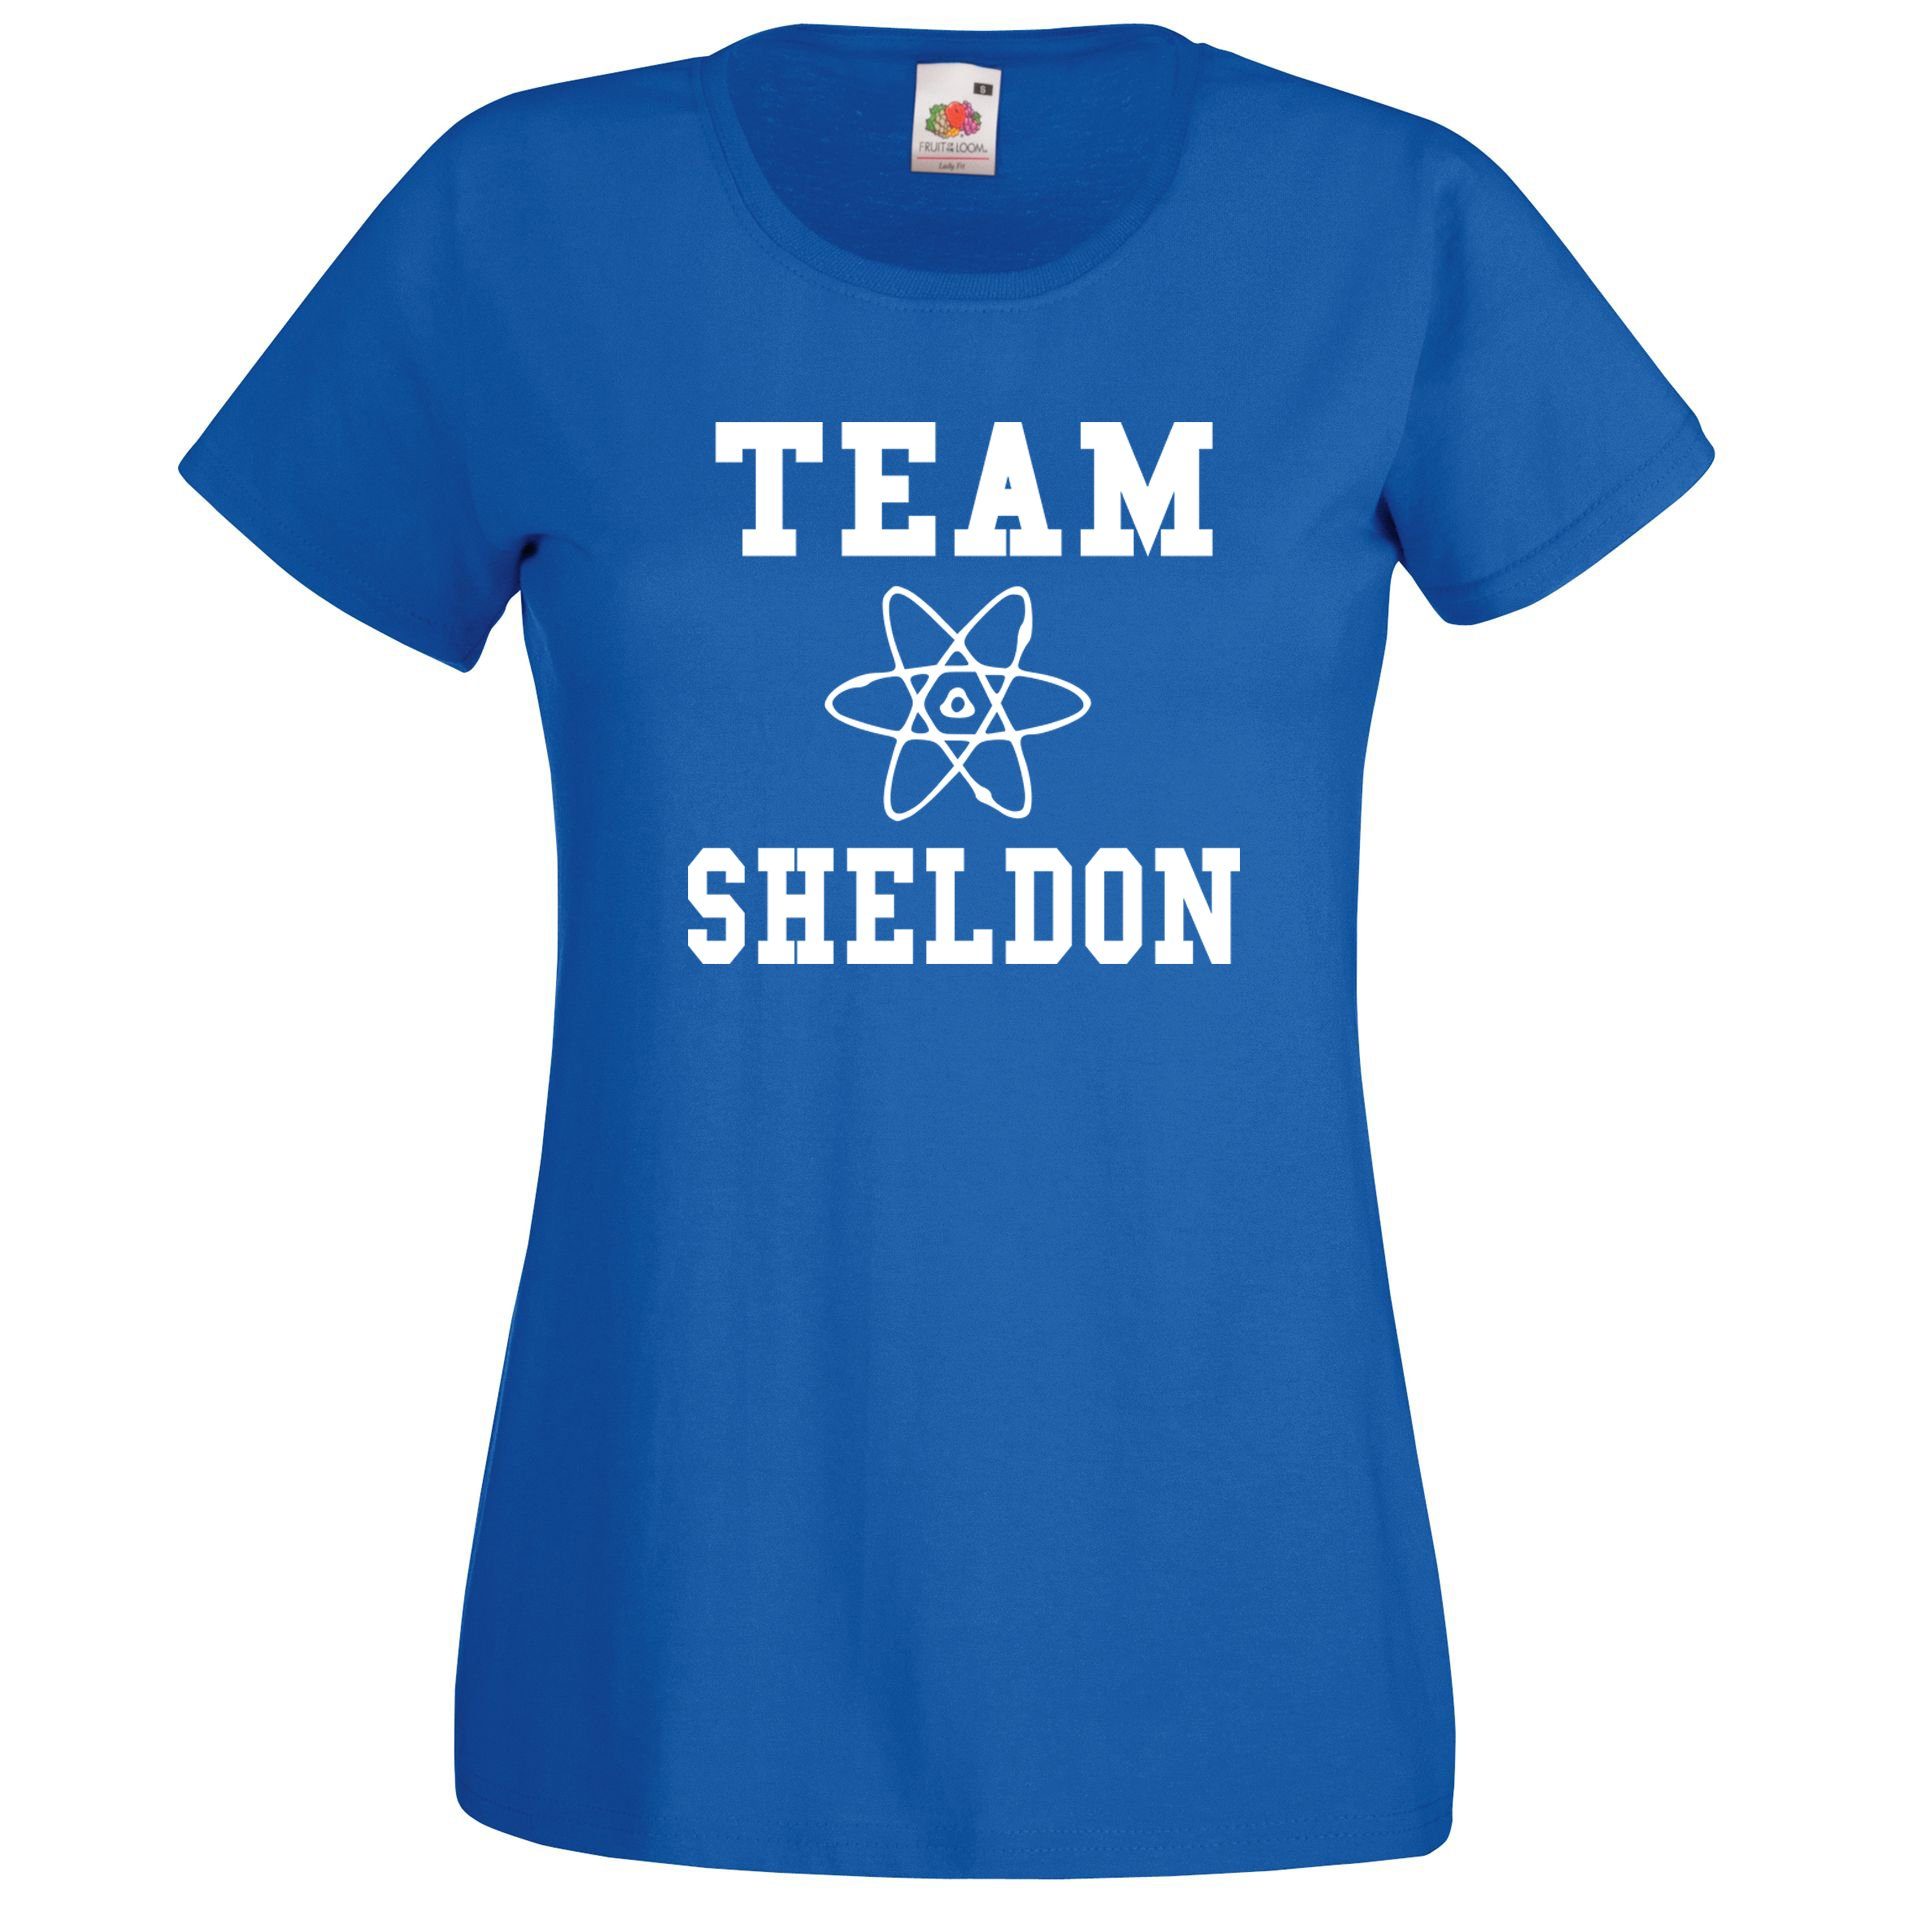 Youth Designz Team T-Shirt Sheldon Royalblau mit Damen T-Shirt Motiv trendigem